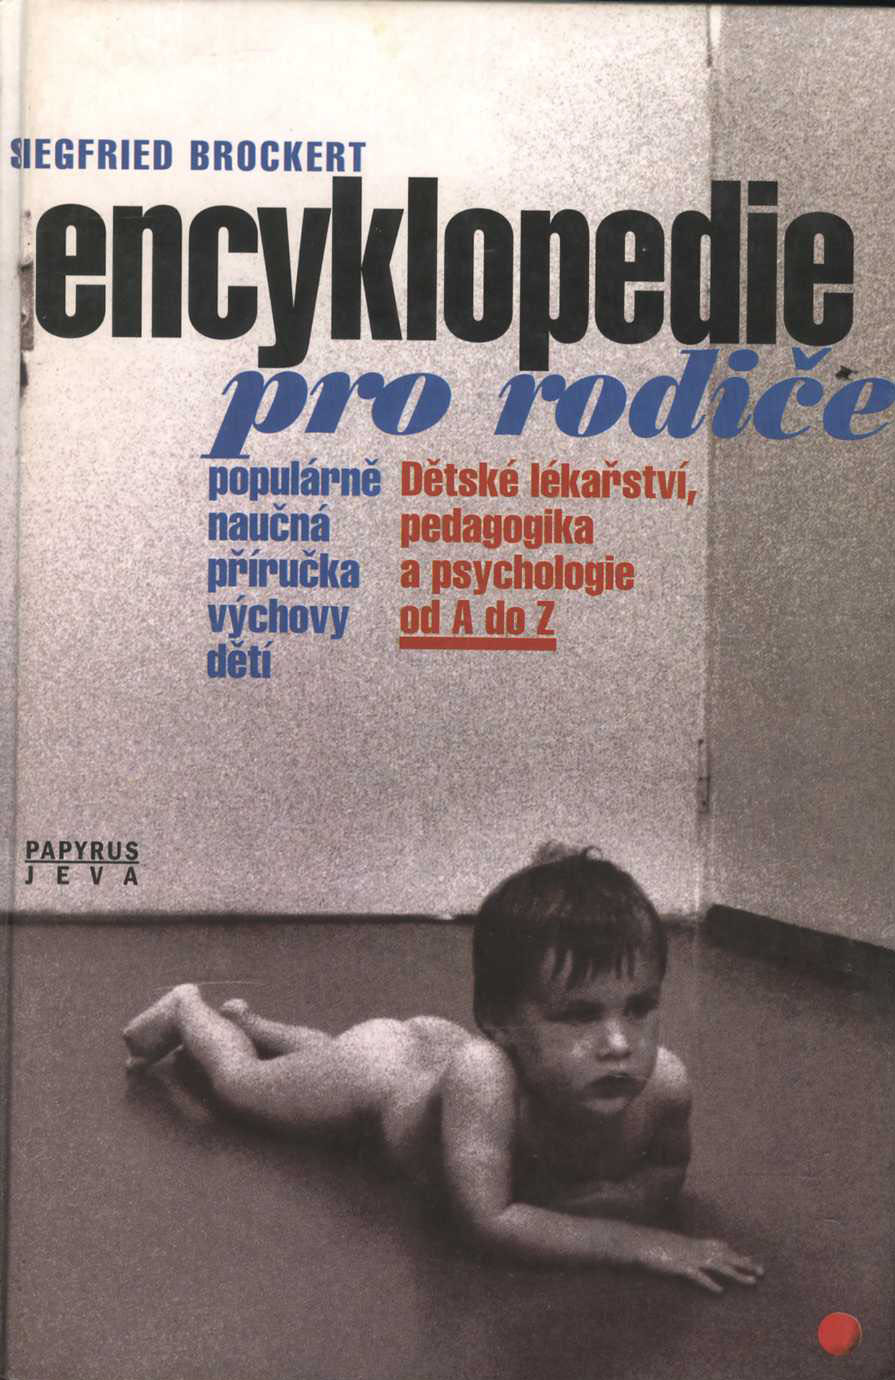 Encyklopedie pro rodiče (Siegfried Brockert)